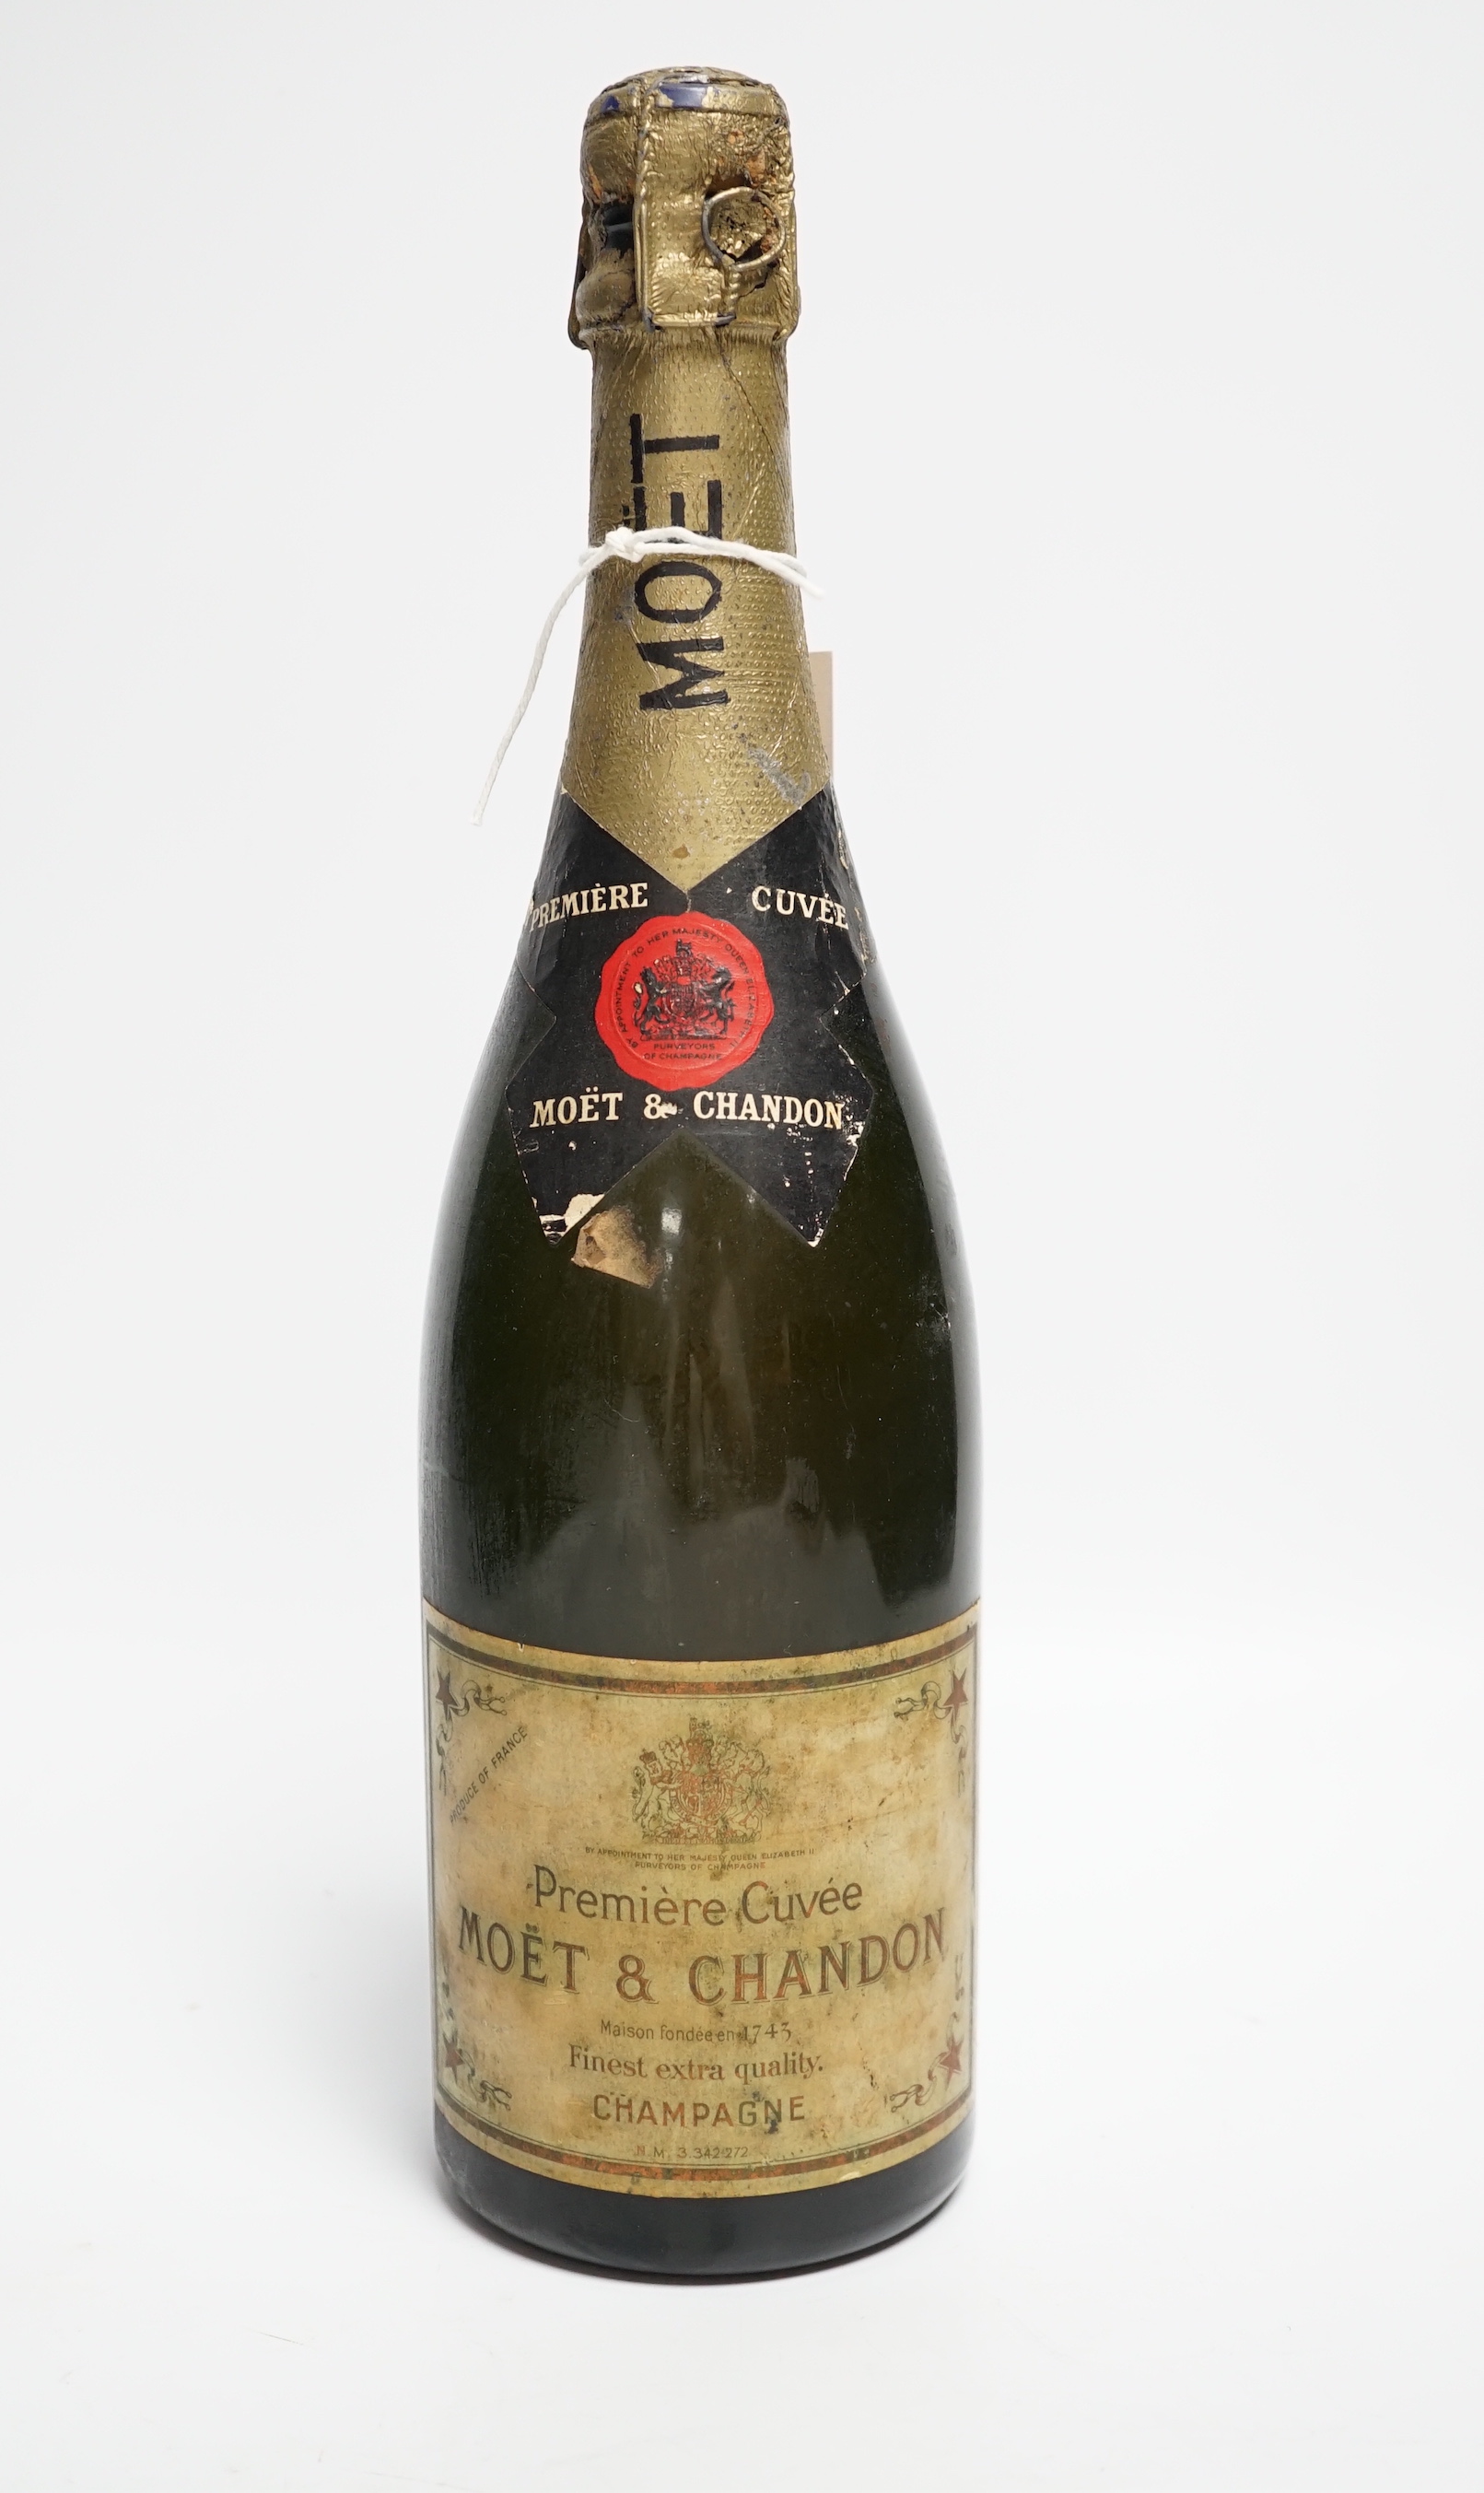 A bottle of Moet et Chandon champagne - Image 4 of 6